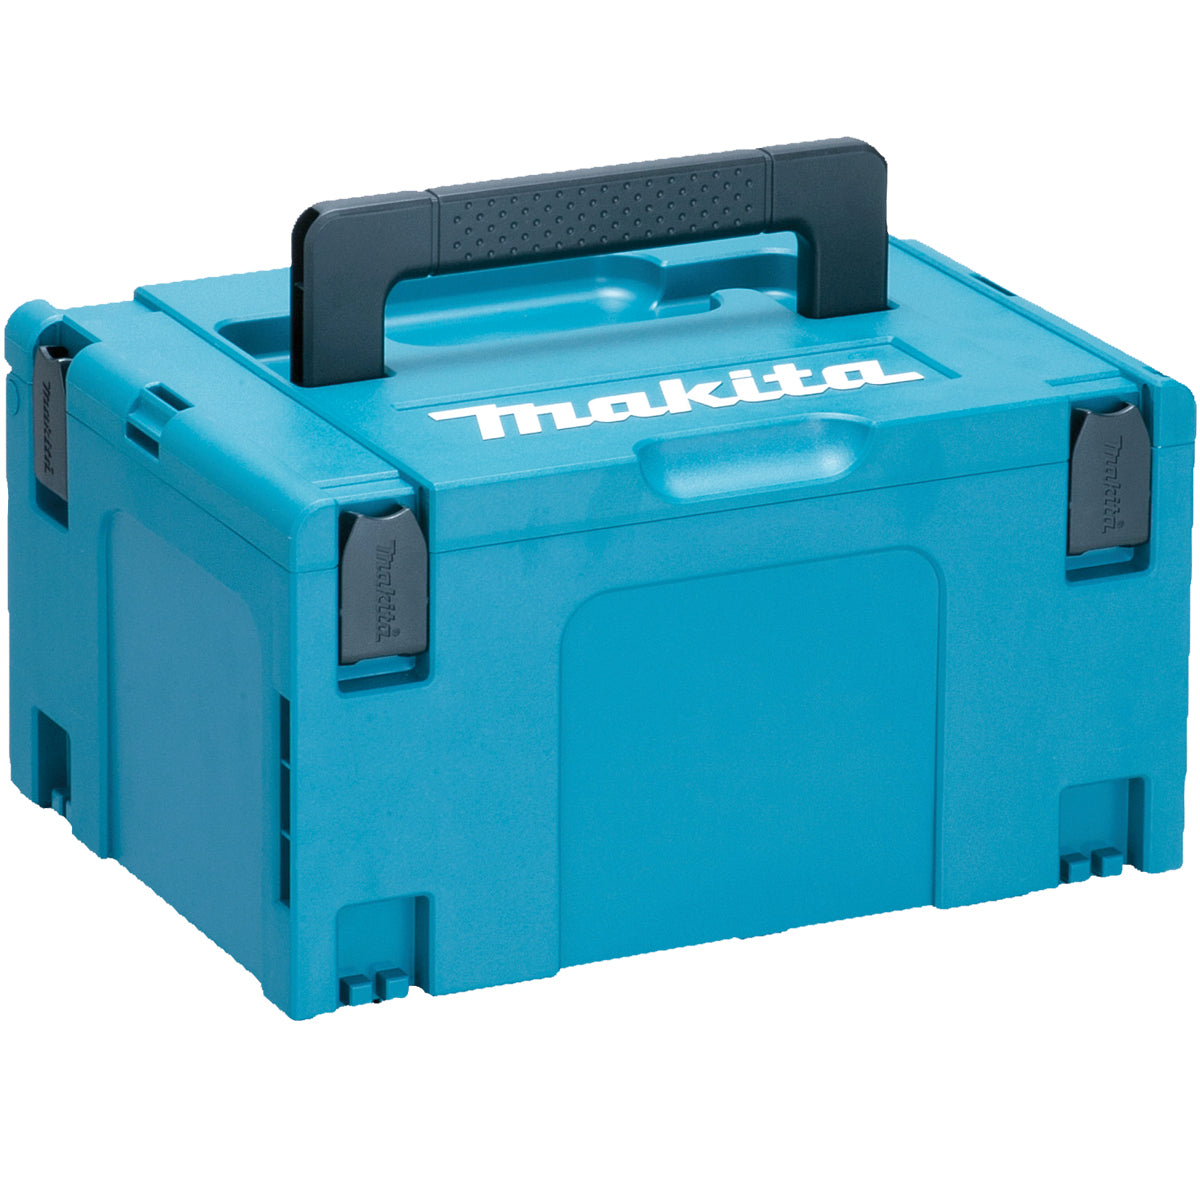 Makita 12 Piece Kit 18V Li-ion With 4 x 5.0Ah Batteries Charger T4TKIT-12